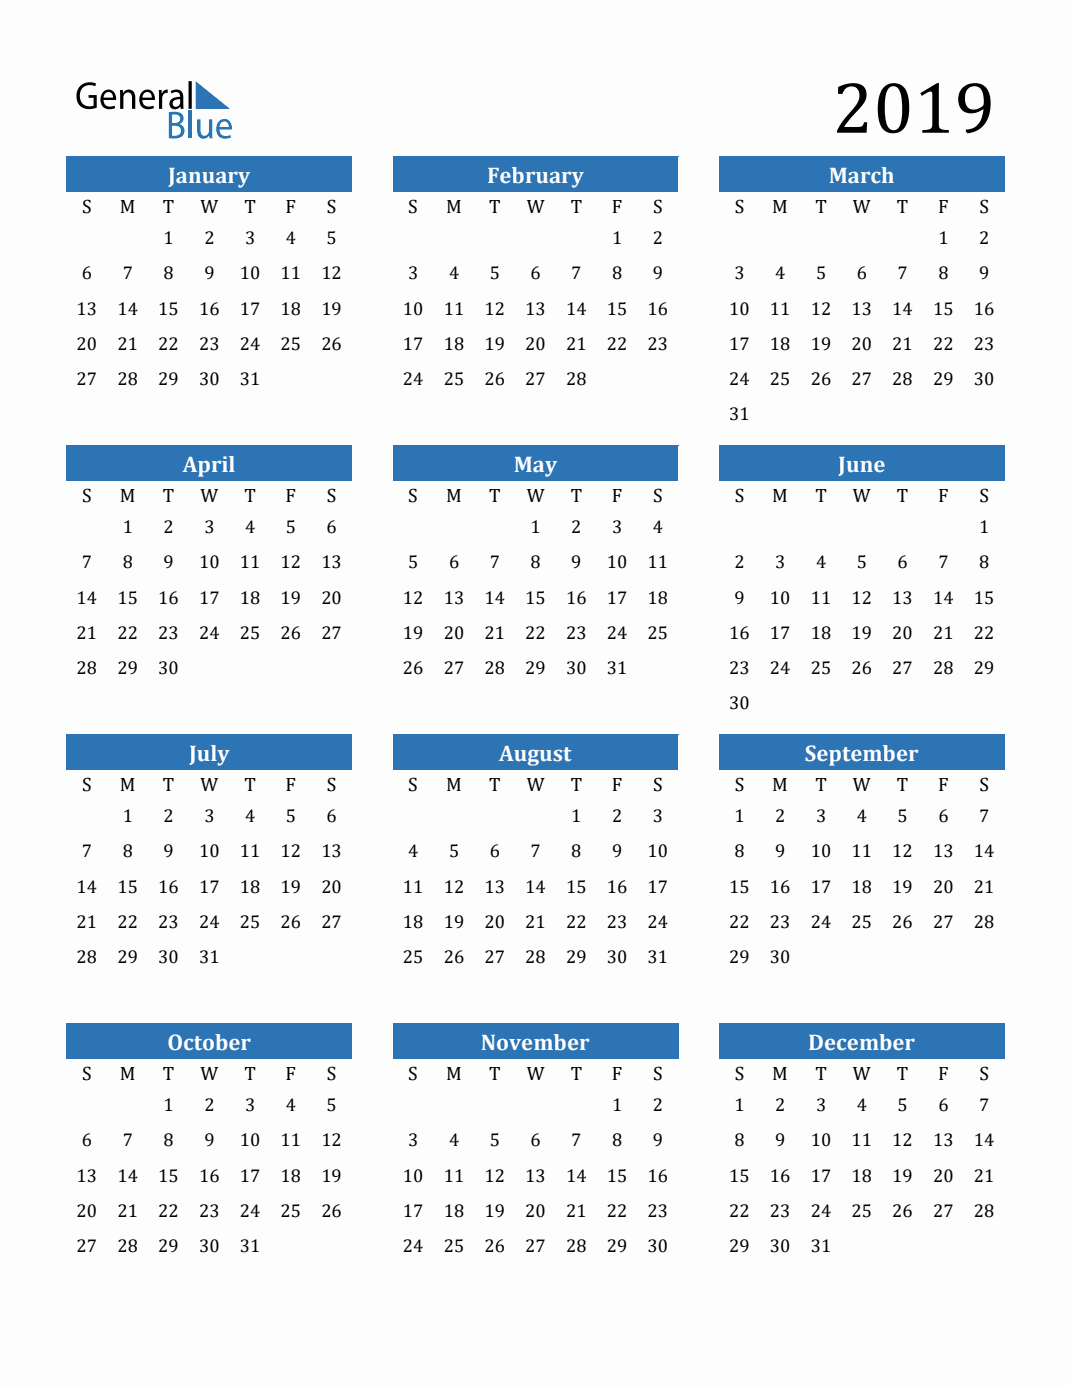 Free September 2022 Desktop Calendar Backgrounds - NP